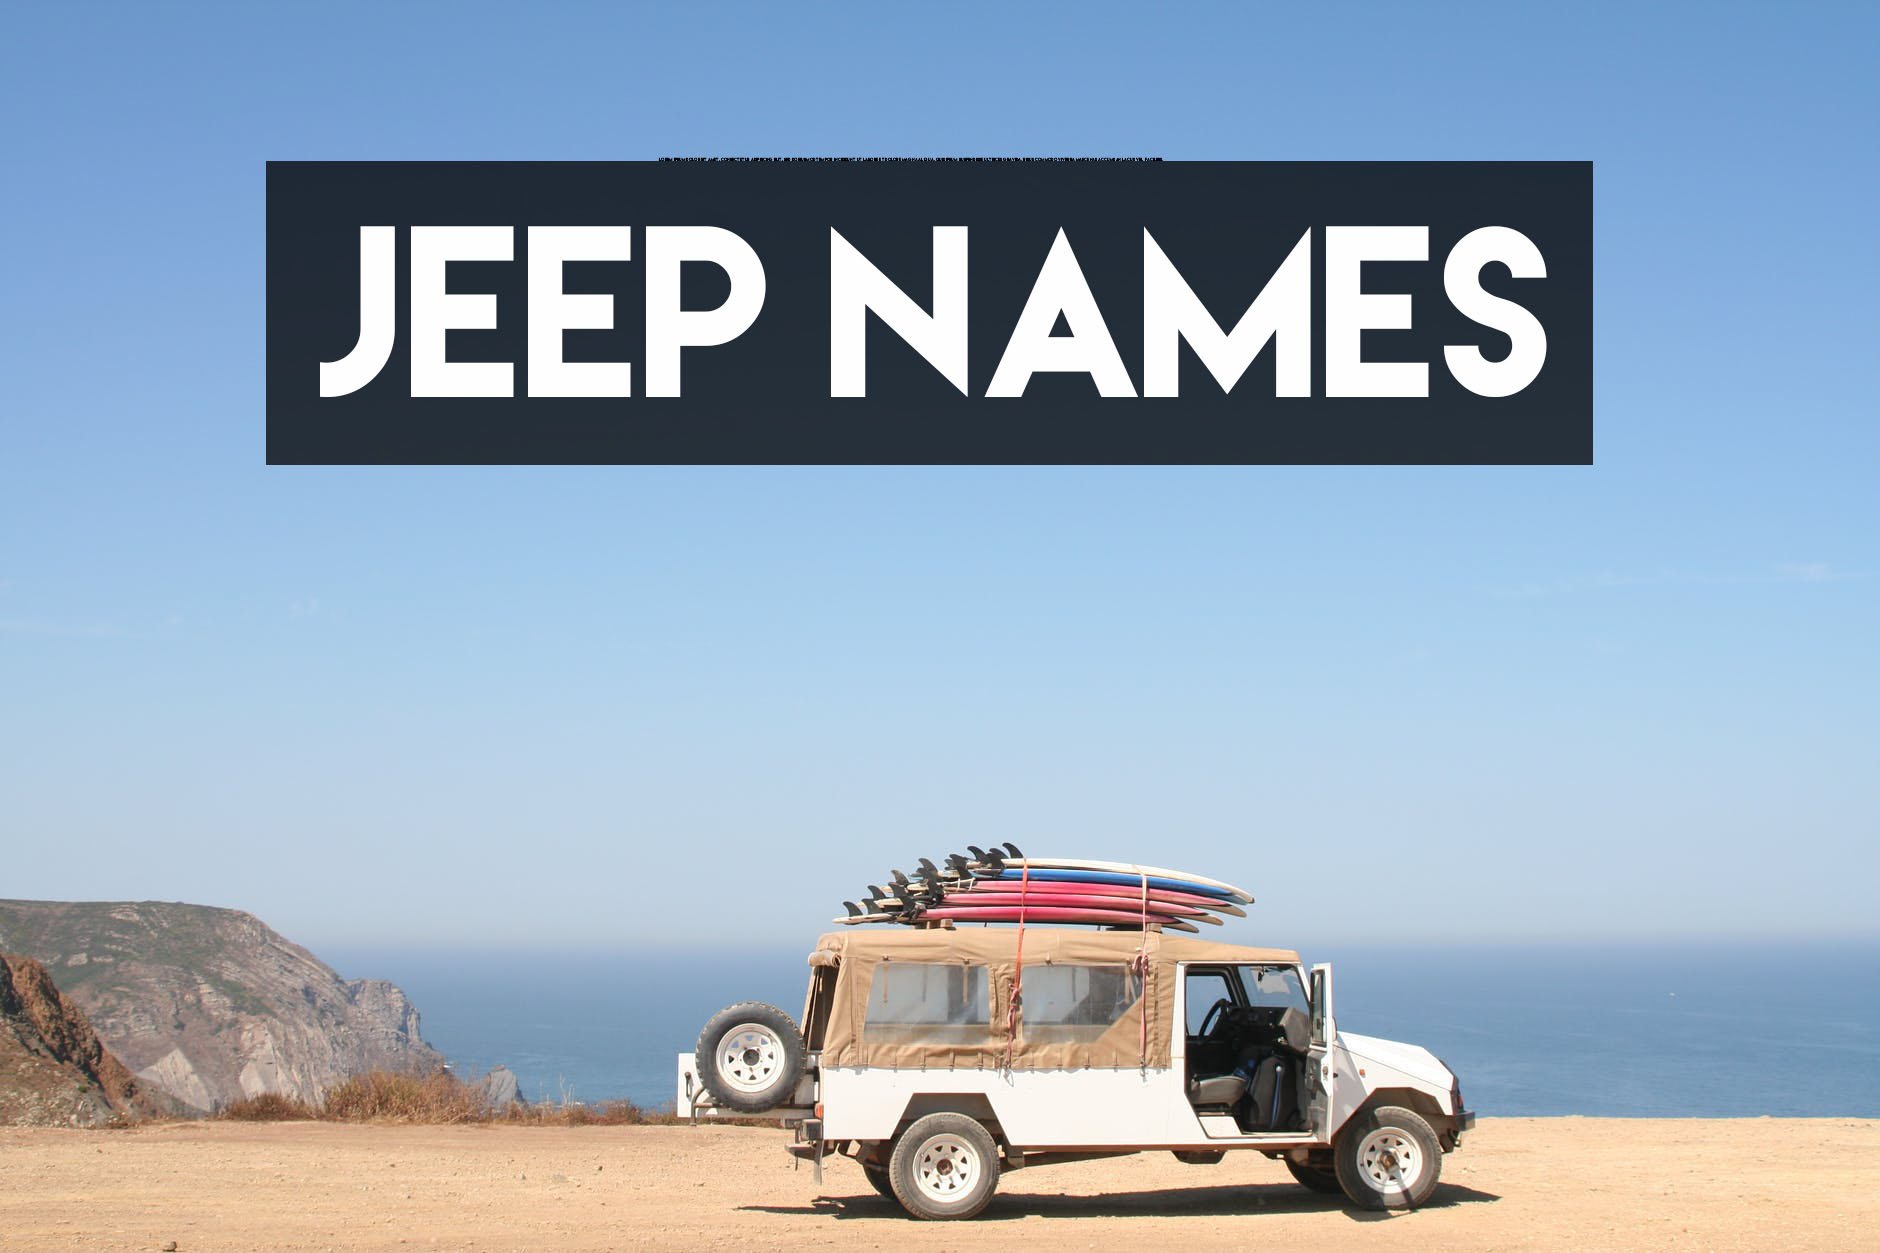 jeep names